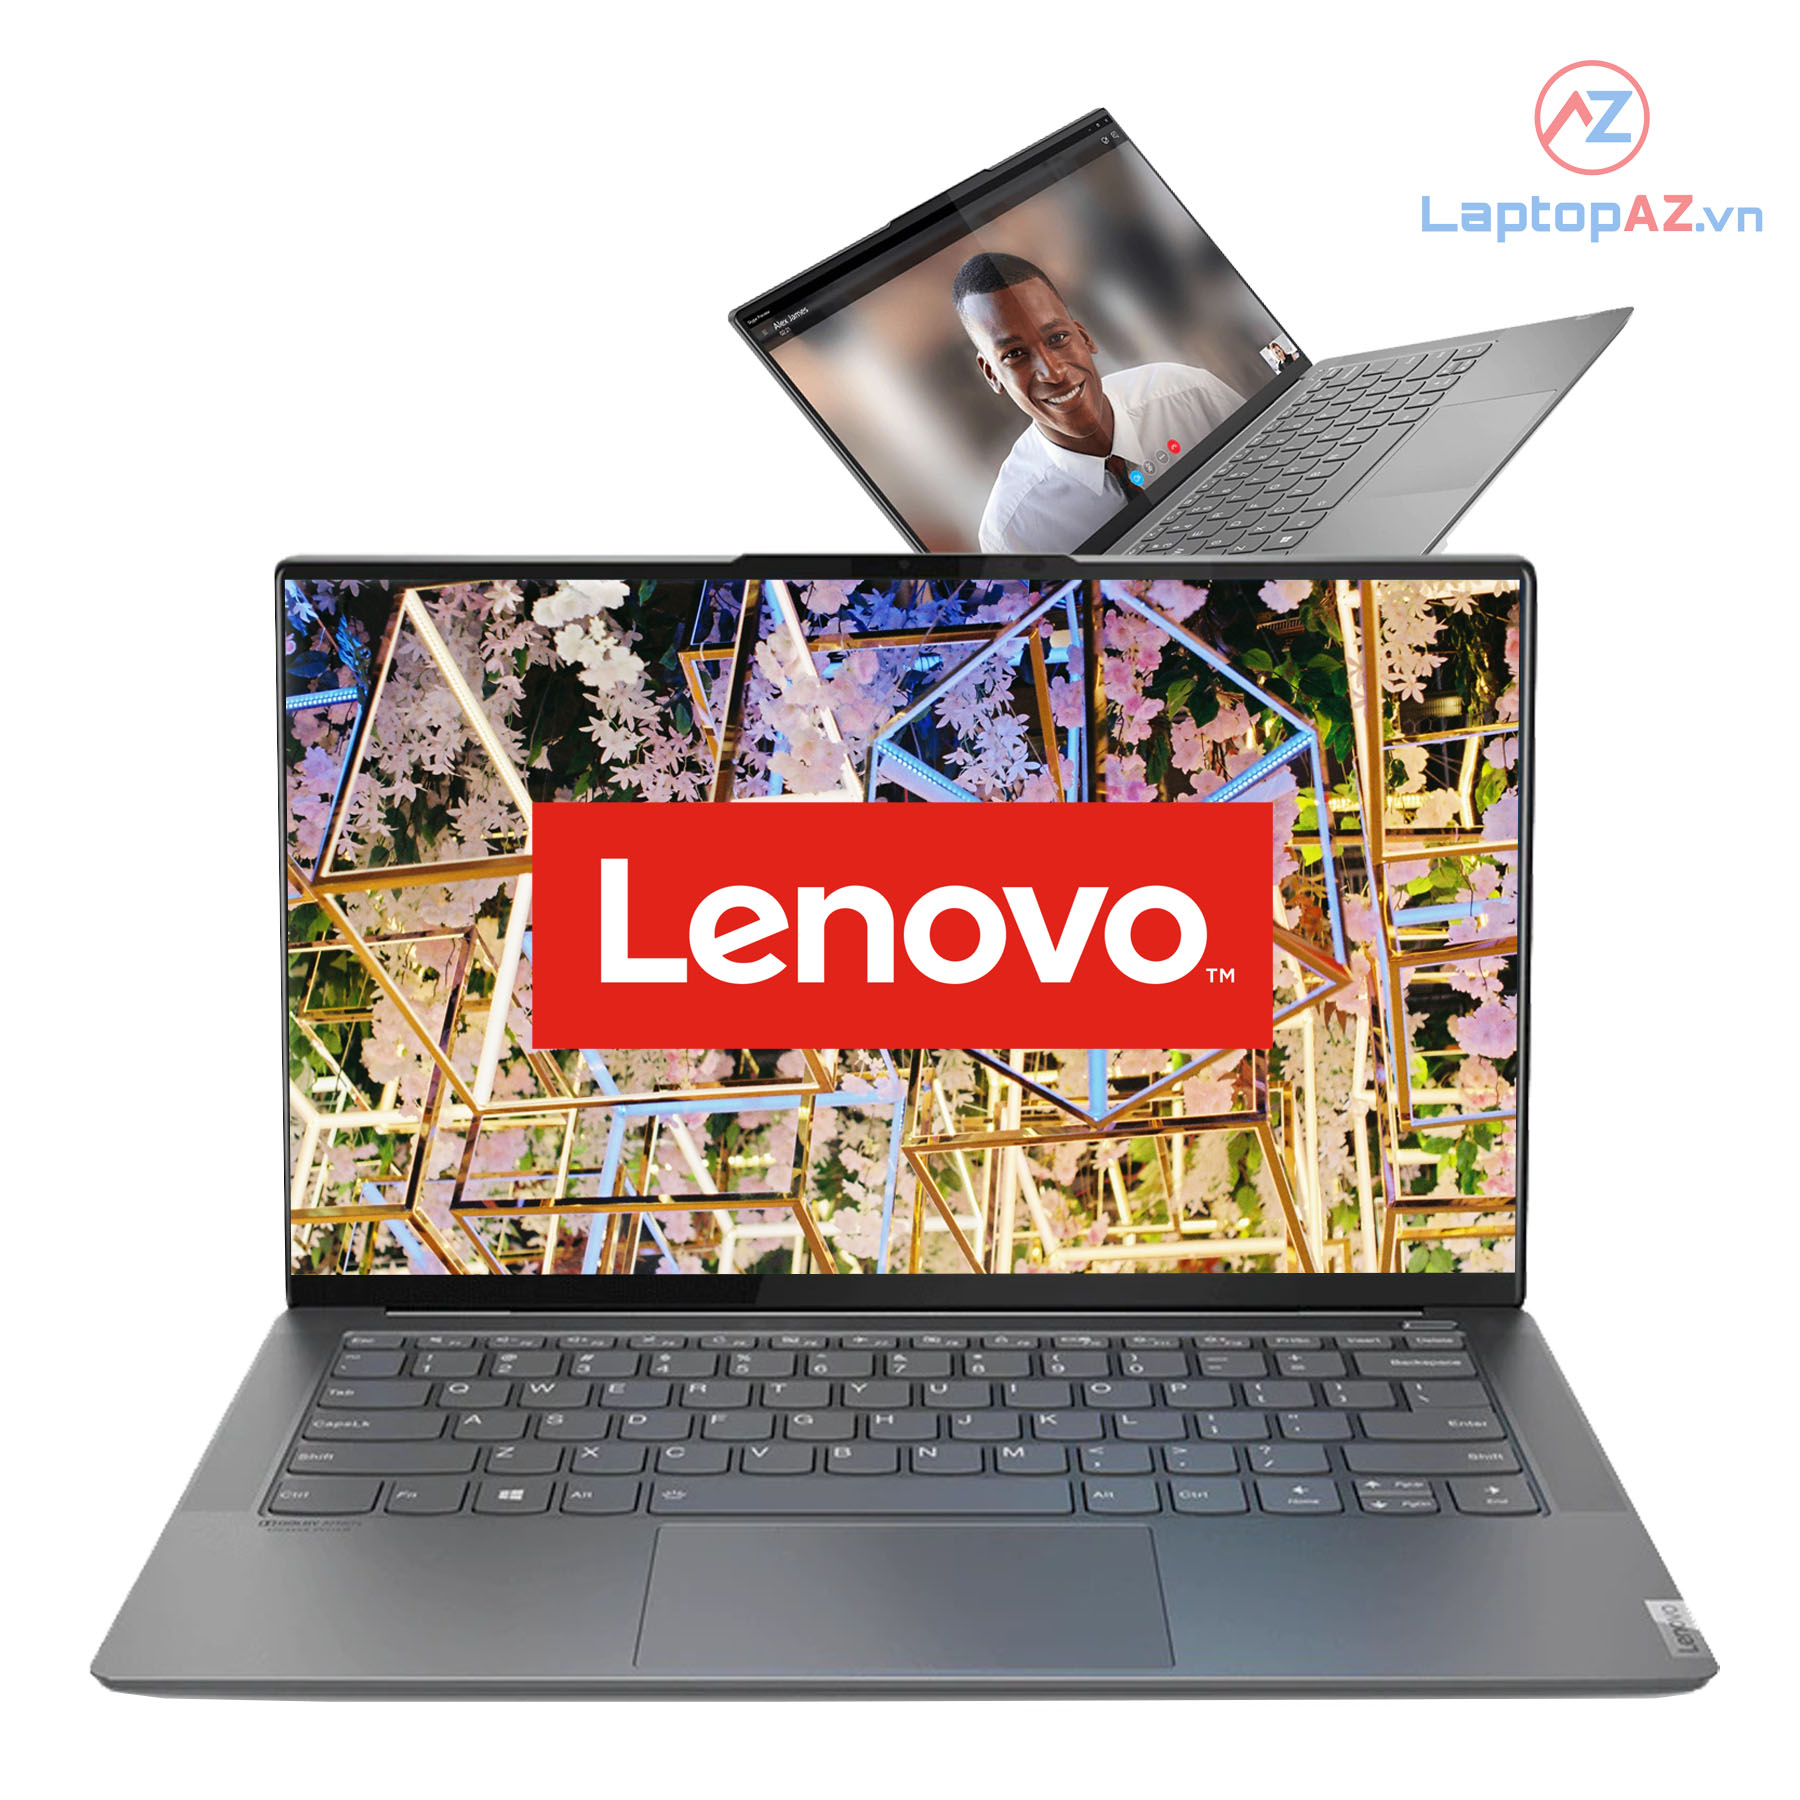 Lenovo IdeaPad S940-14IIL Core i7-1065G7, 16GB, 512GB, Iris Plus Graphics, 14.0'' FHD IPS Touch